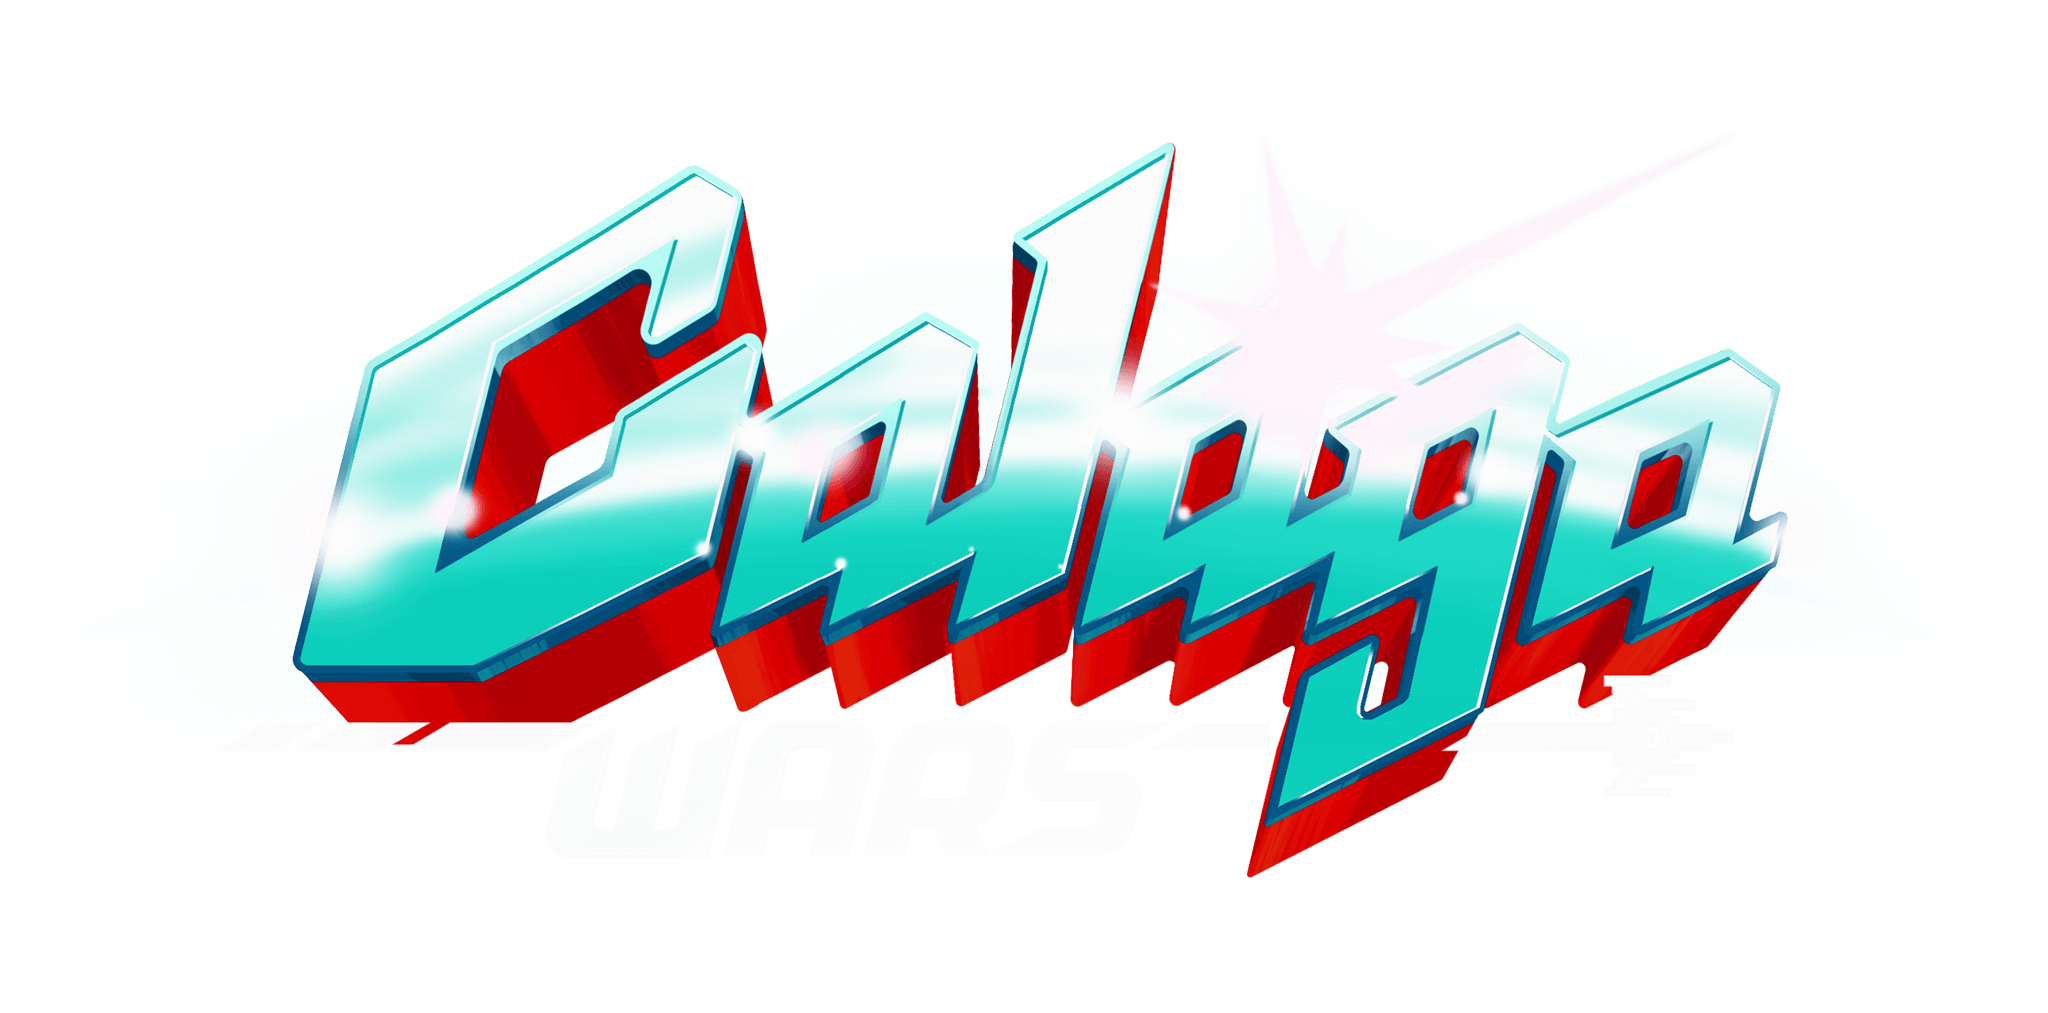 Logo von Galaga Wars (Bildrechte: Namco Bandai)